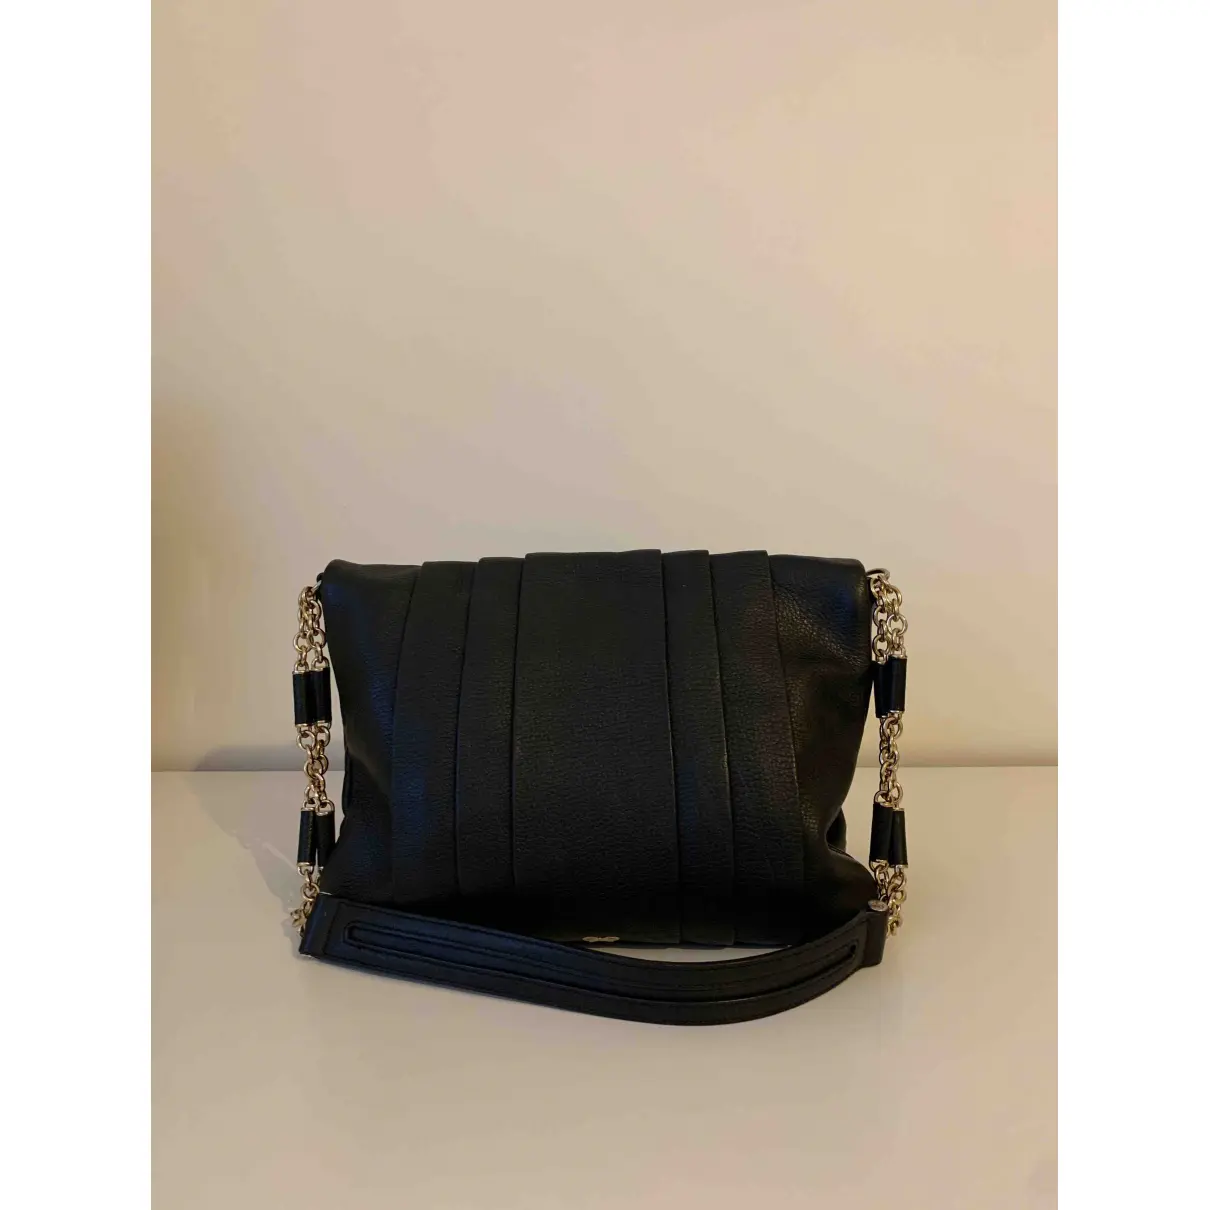 Buy Anya Hindmarch Leather handbag online